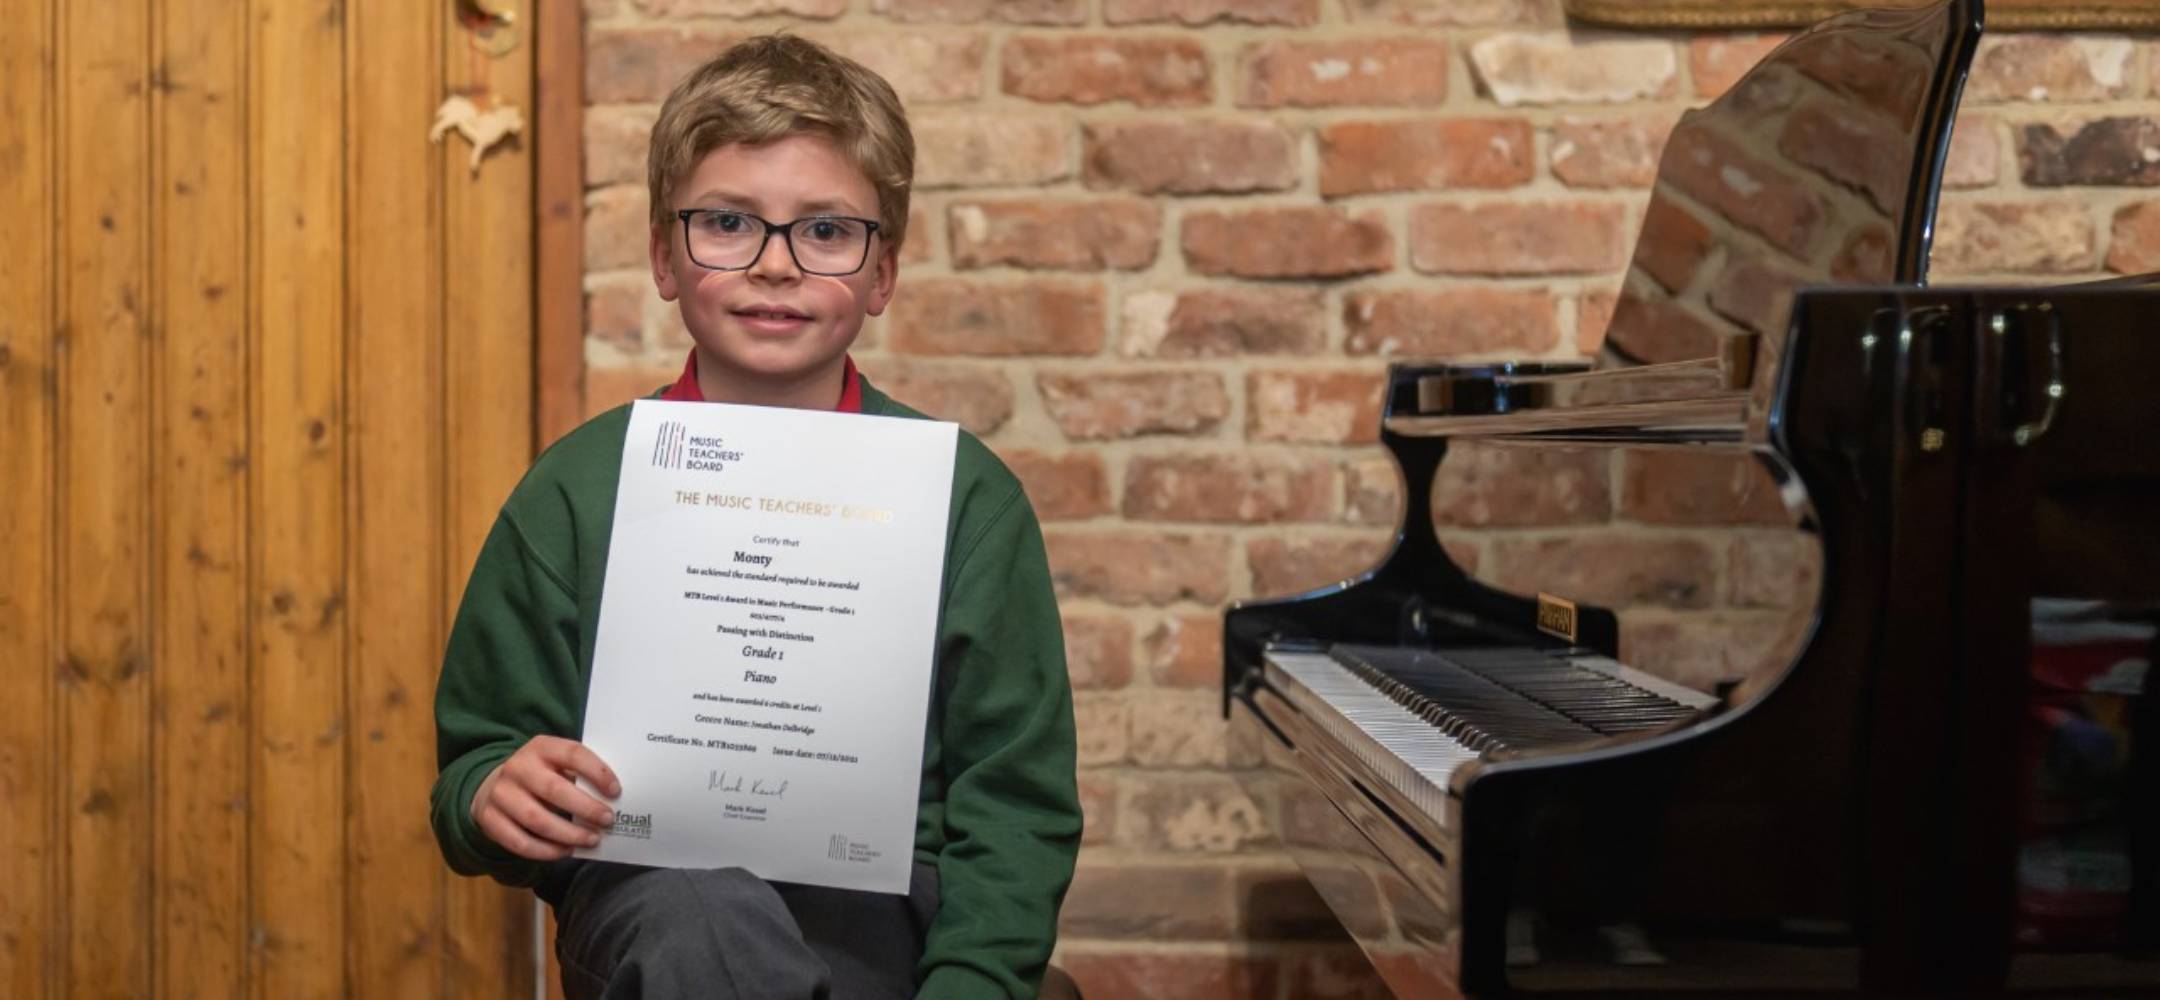 Monty Piano Student Certificate